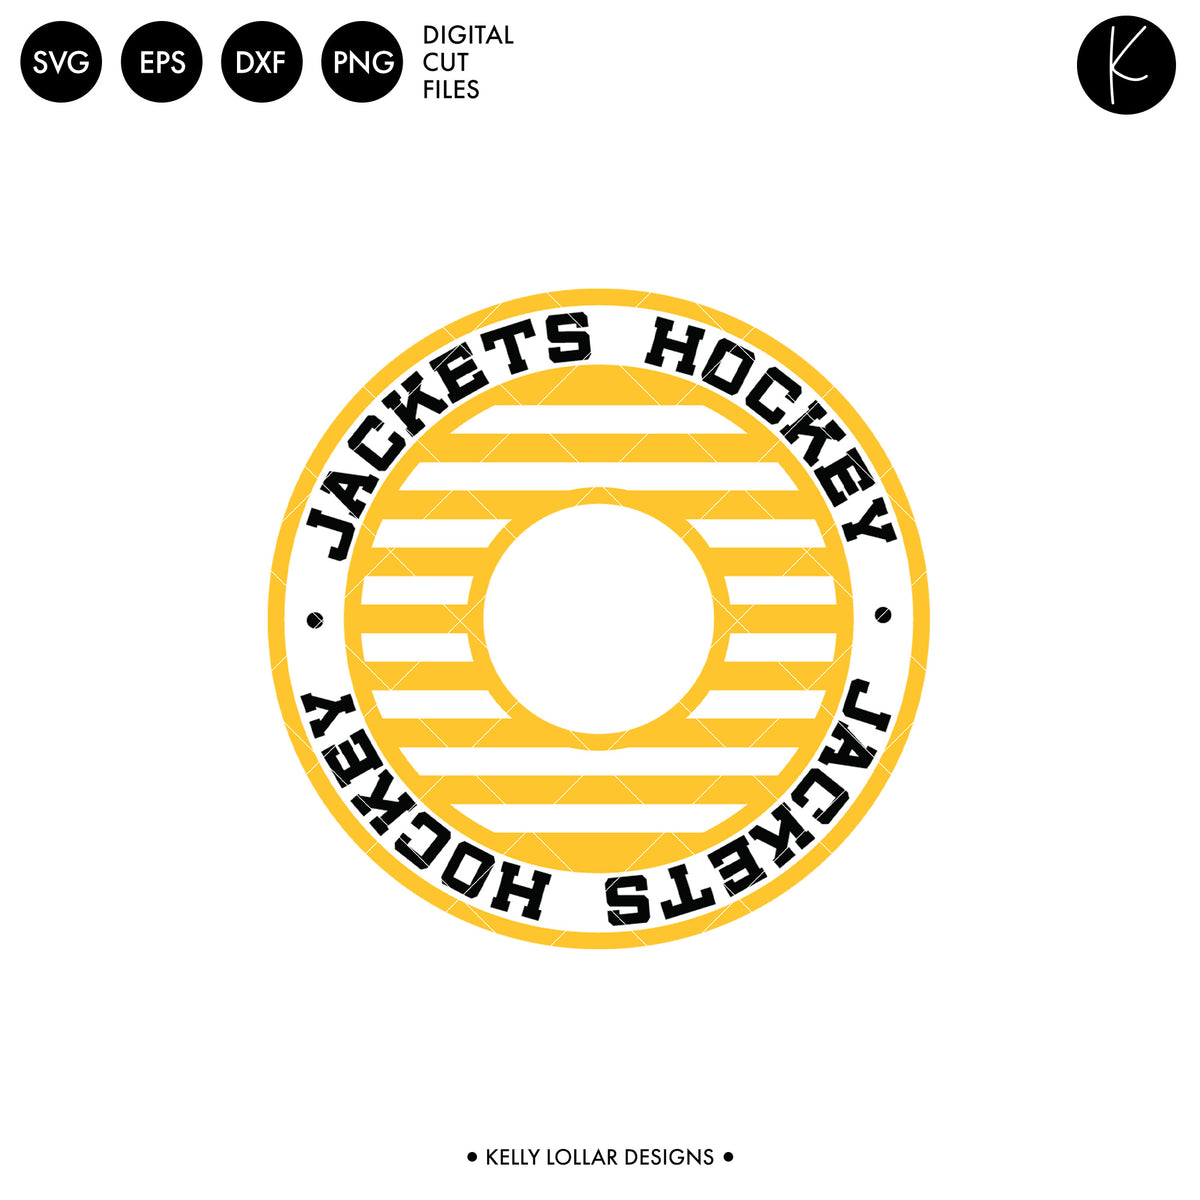 Jackets Hockey Bundle | SVG DXF EPS PNG Cut Files